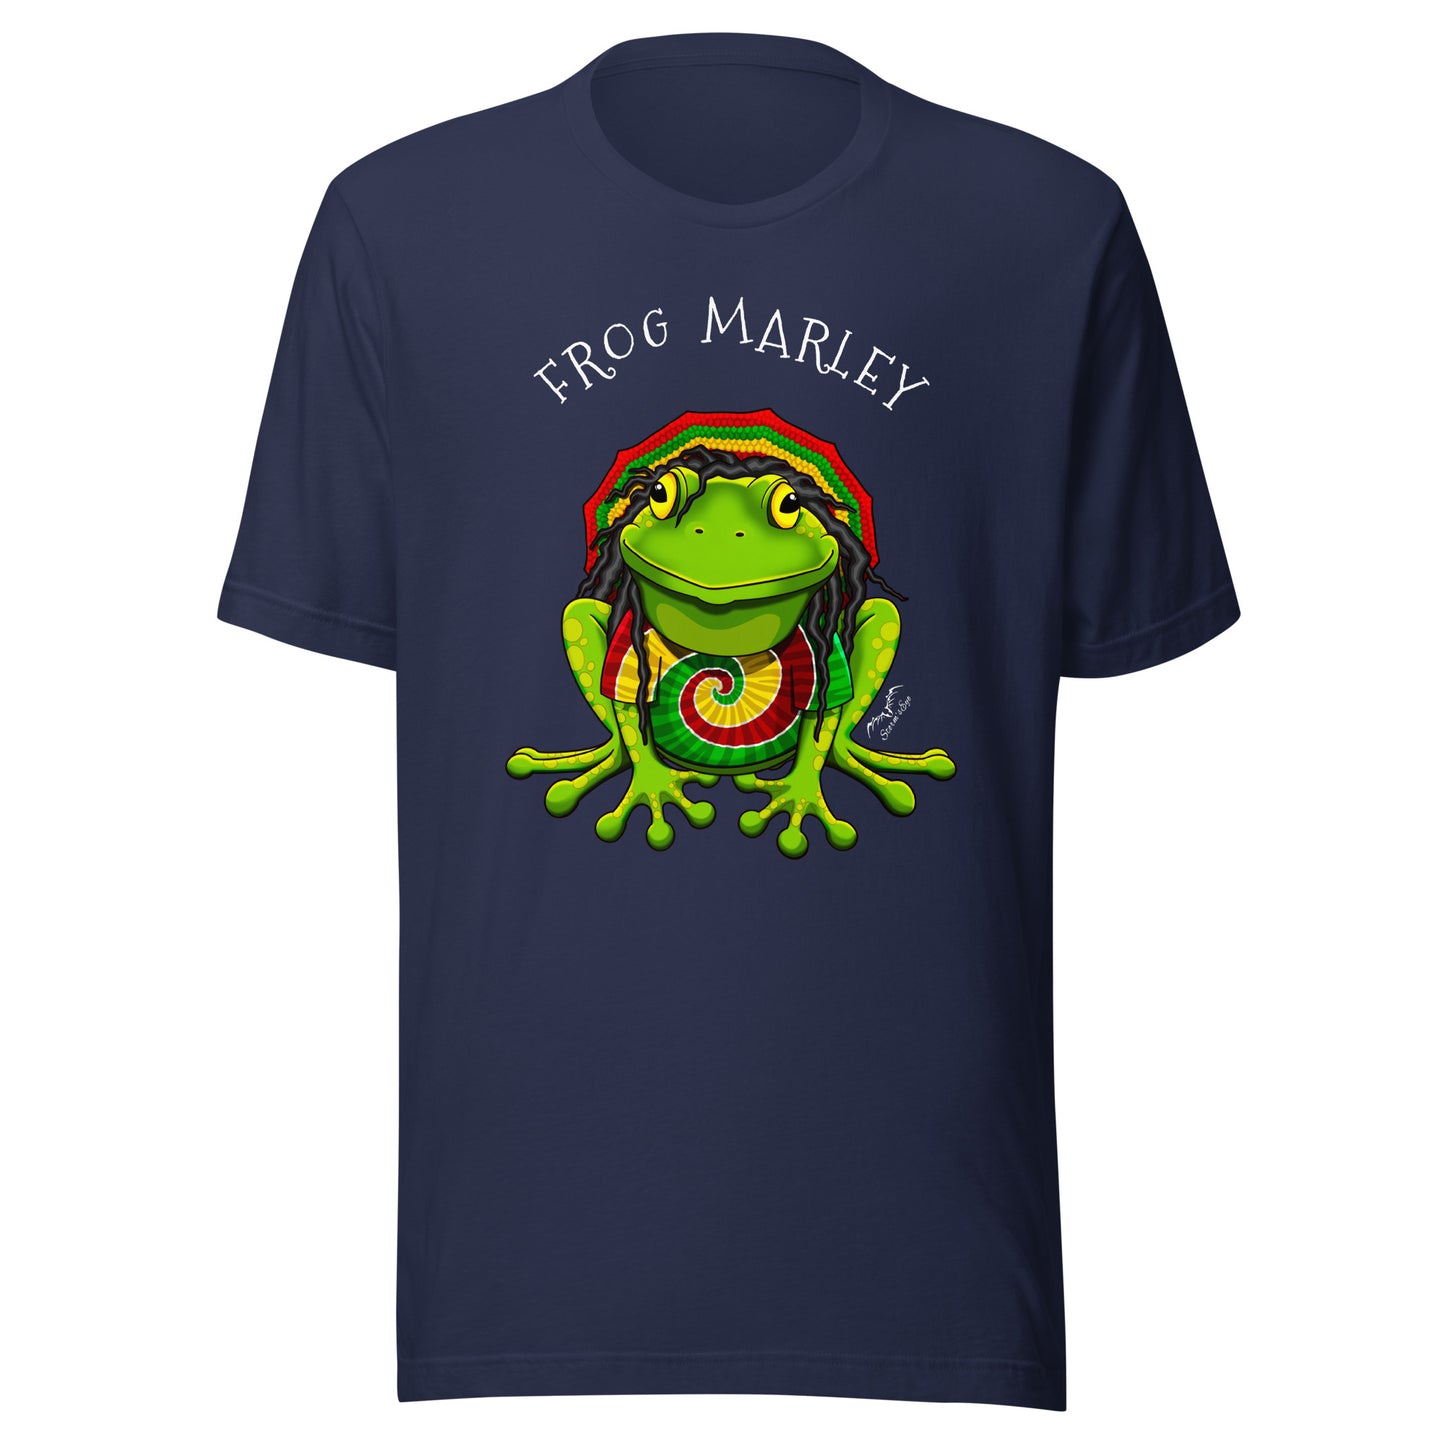 stormseye design frog marley reggae T shirt, flat view navy blue